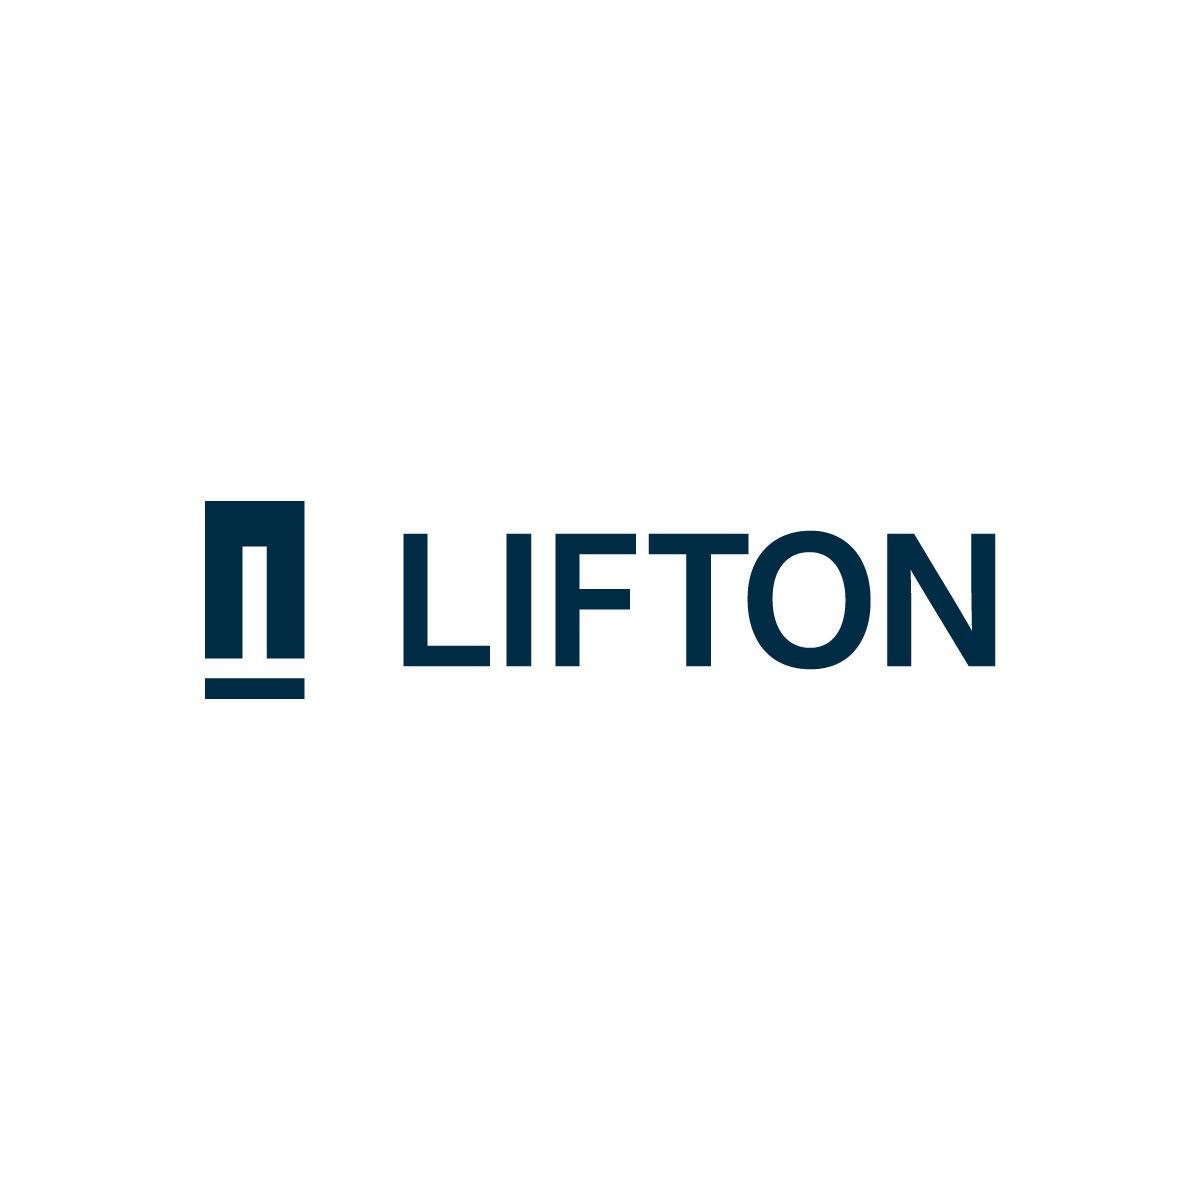 Lifton Logo